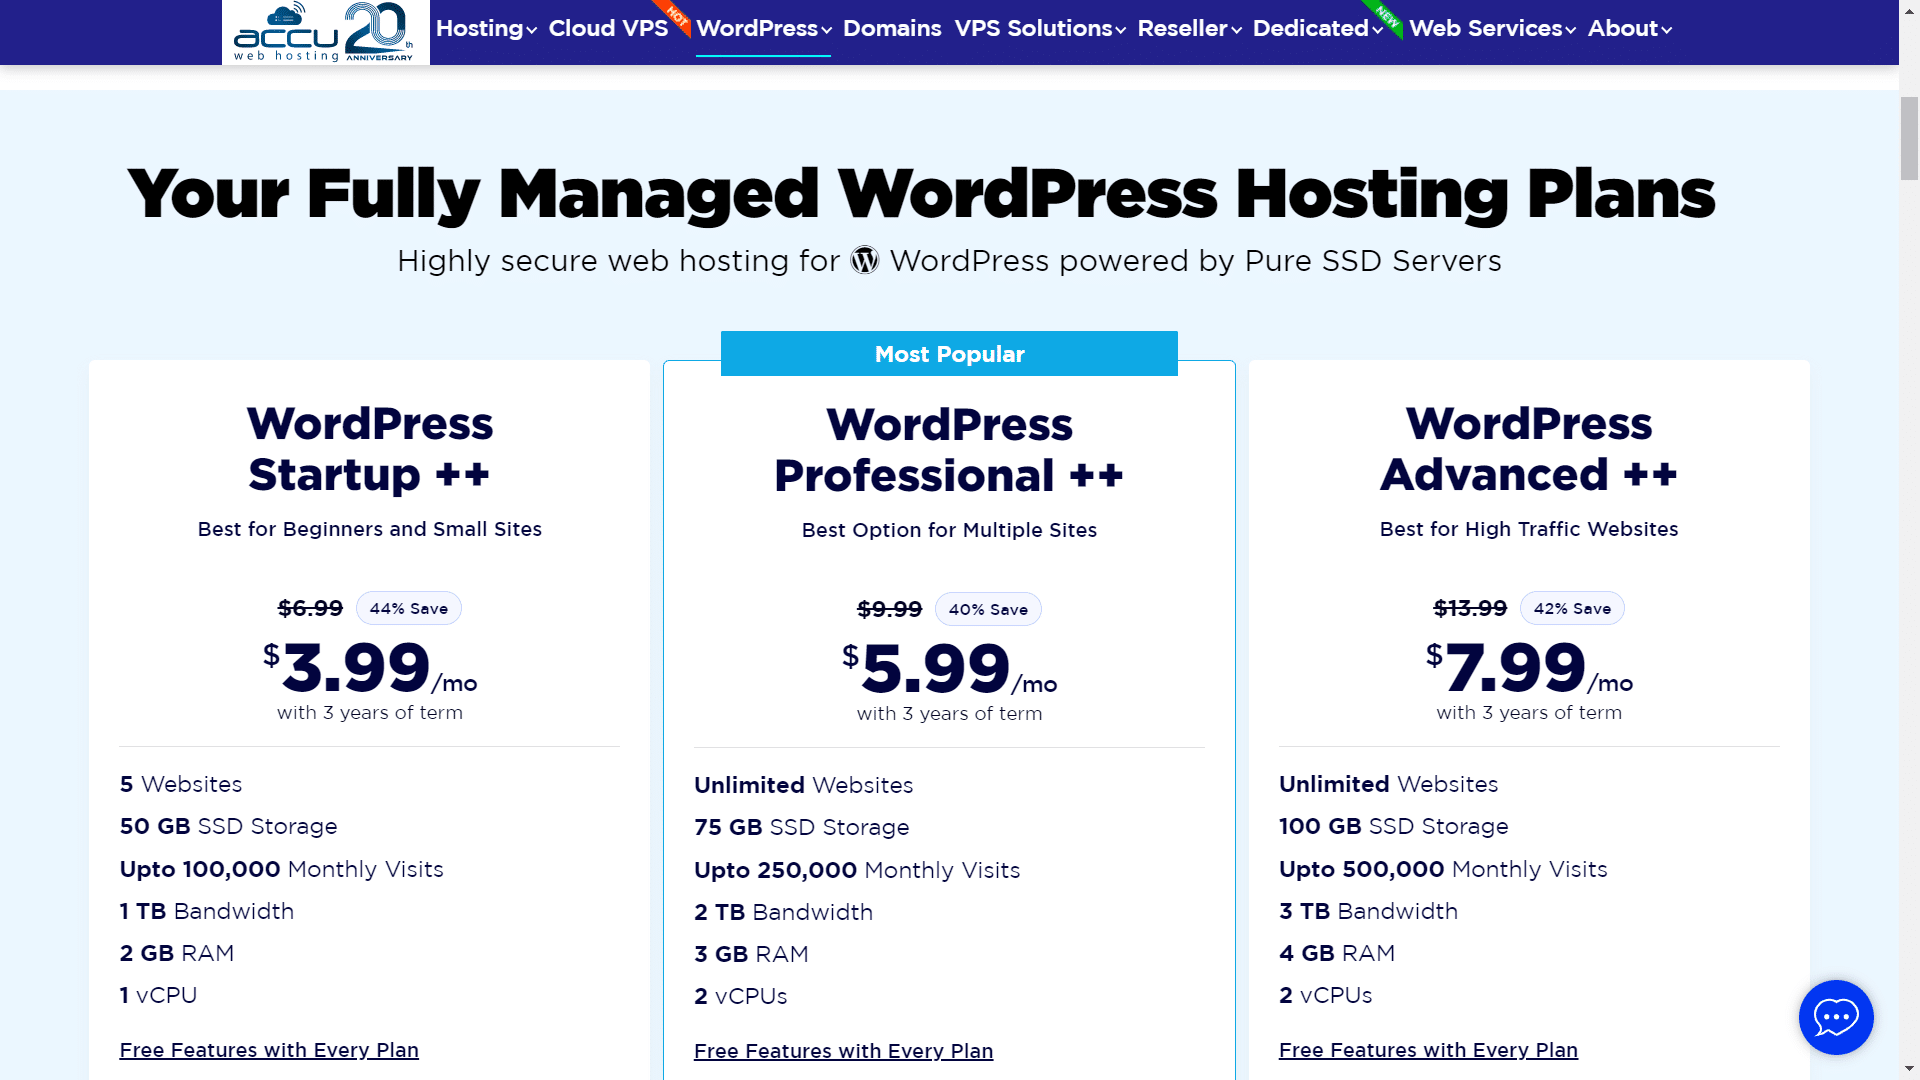 accuweb vs namecheap - accuweb wordpress hosting pricing